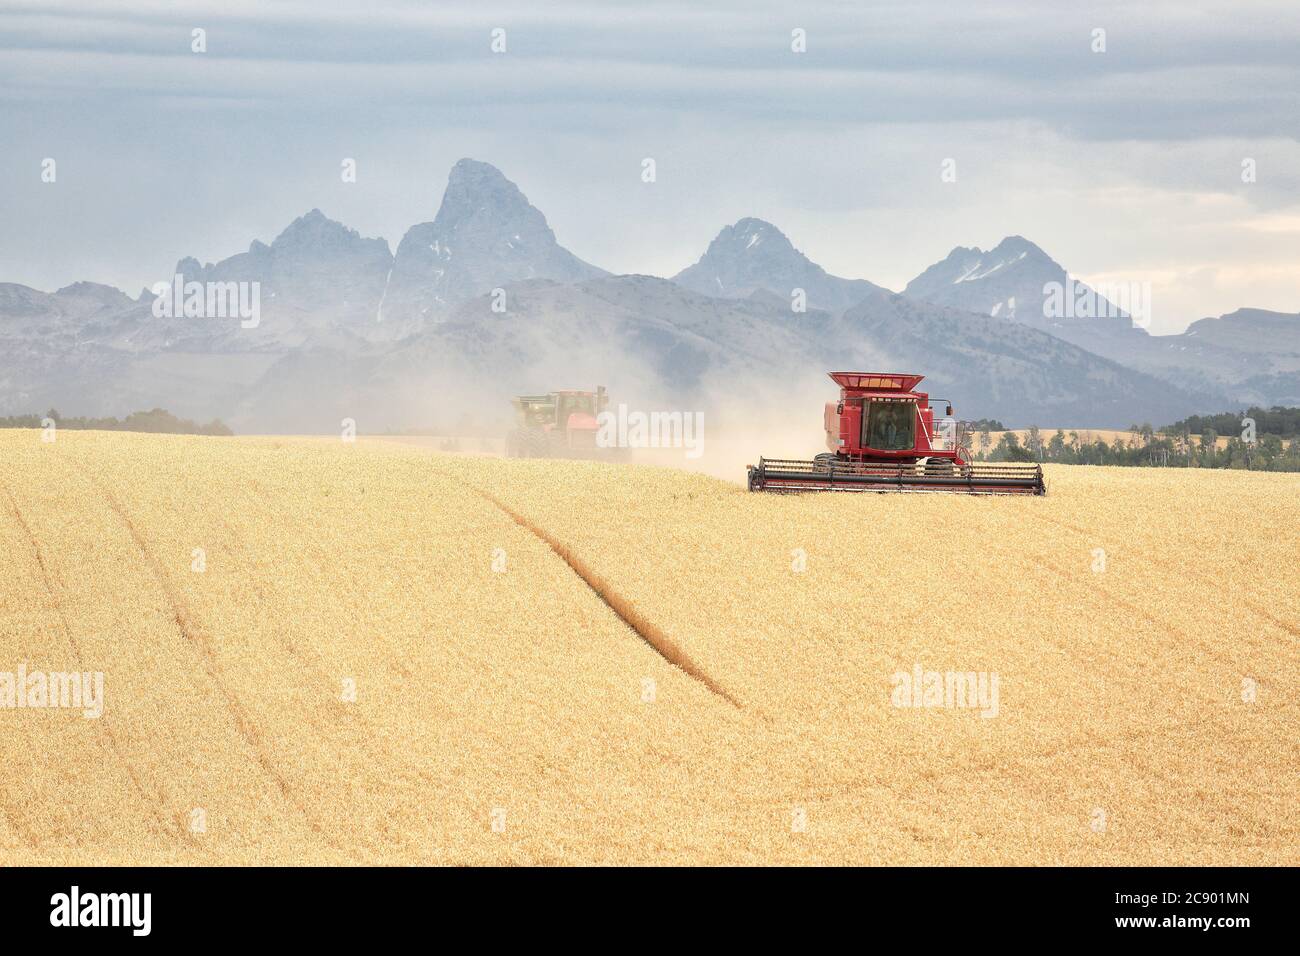 A grain combine works harvesting wheat in the fertile farm fields of Idaho, in front of the Teton mountain range. Stock Photo